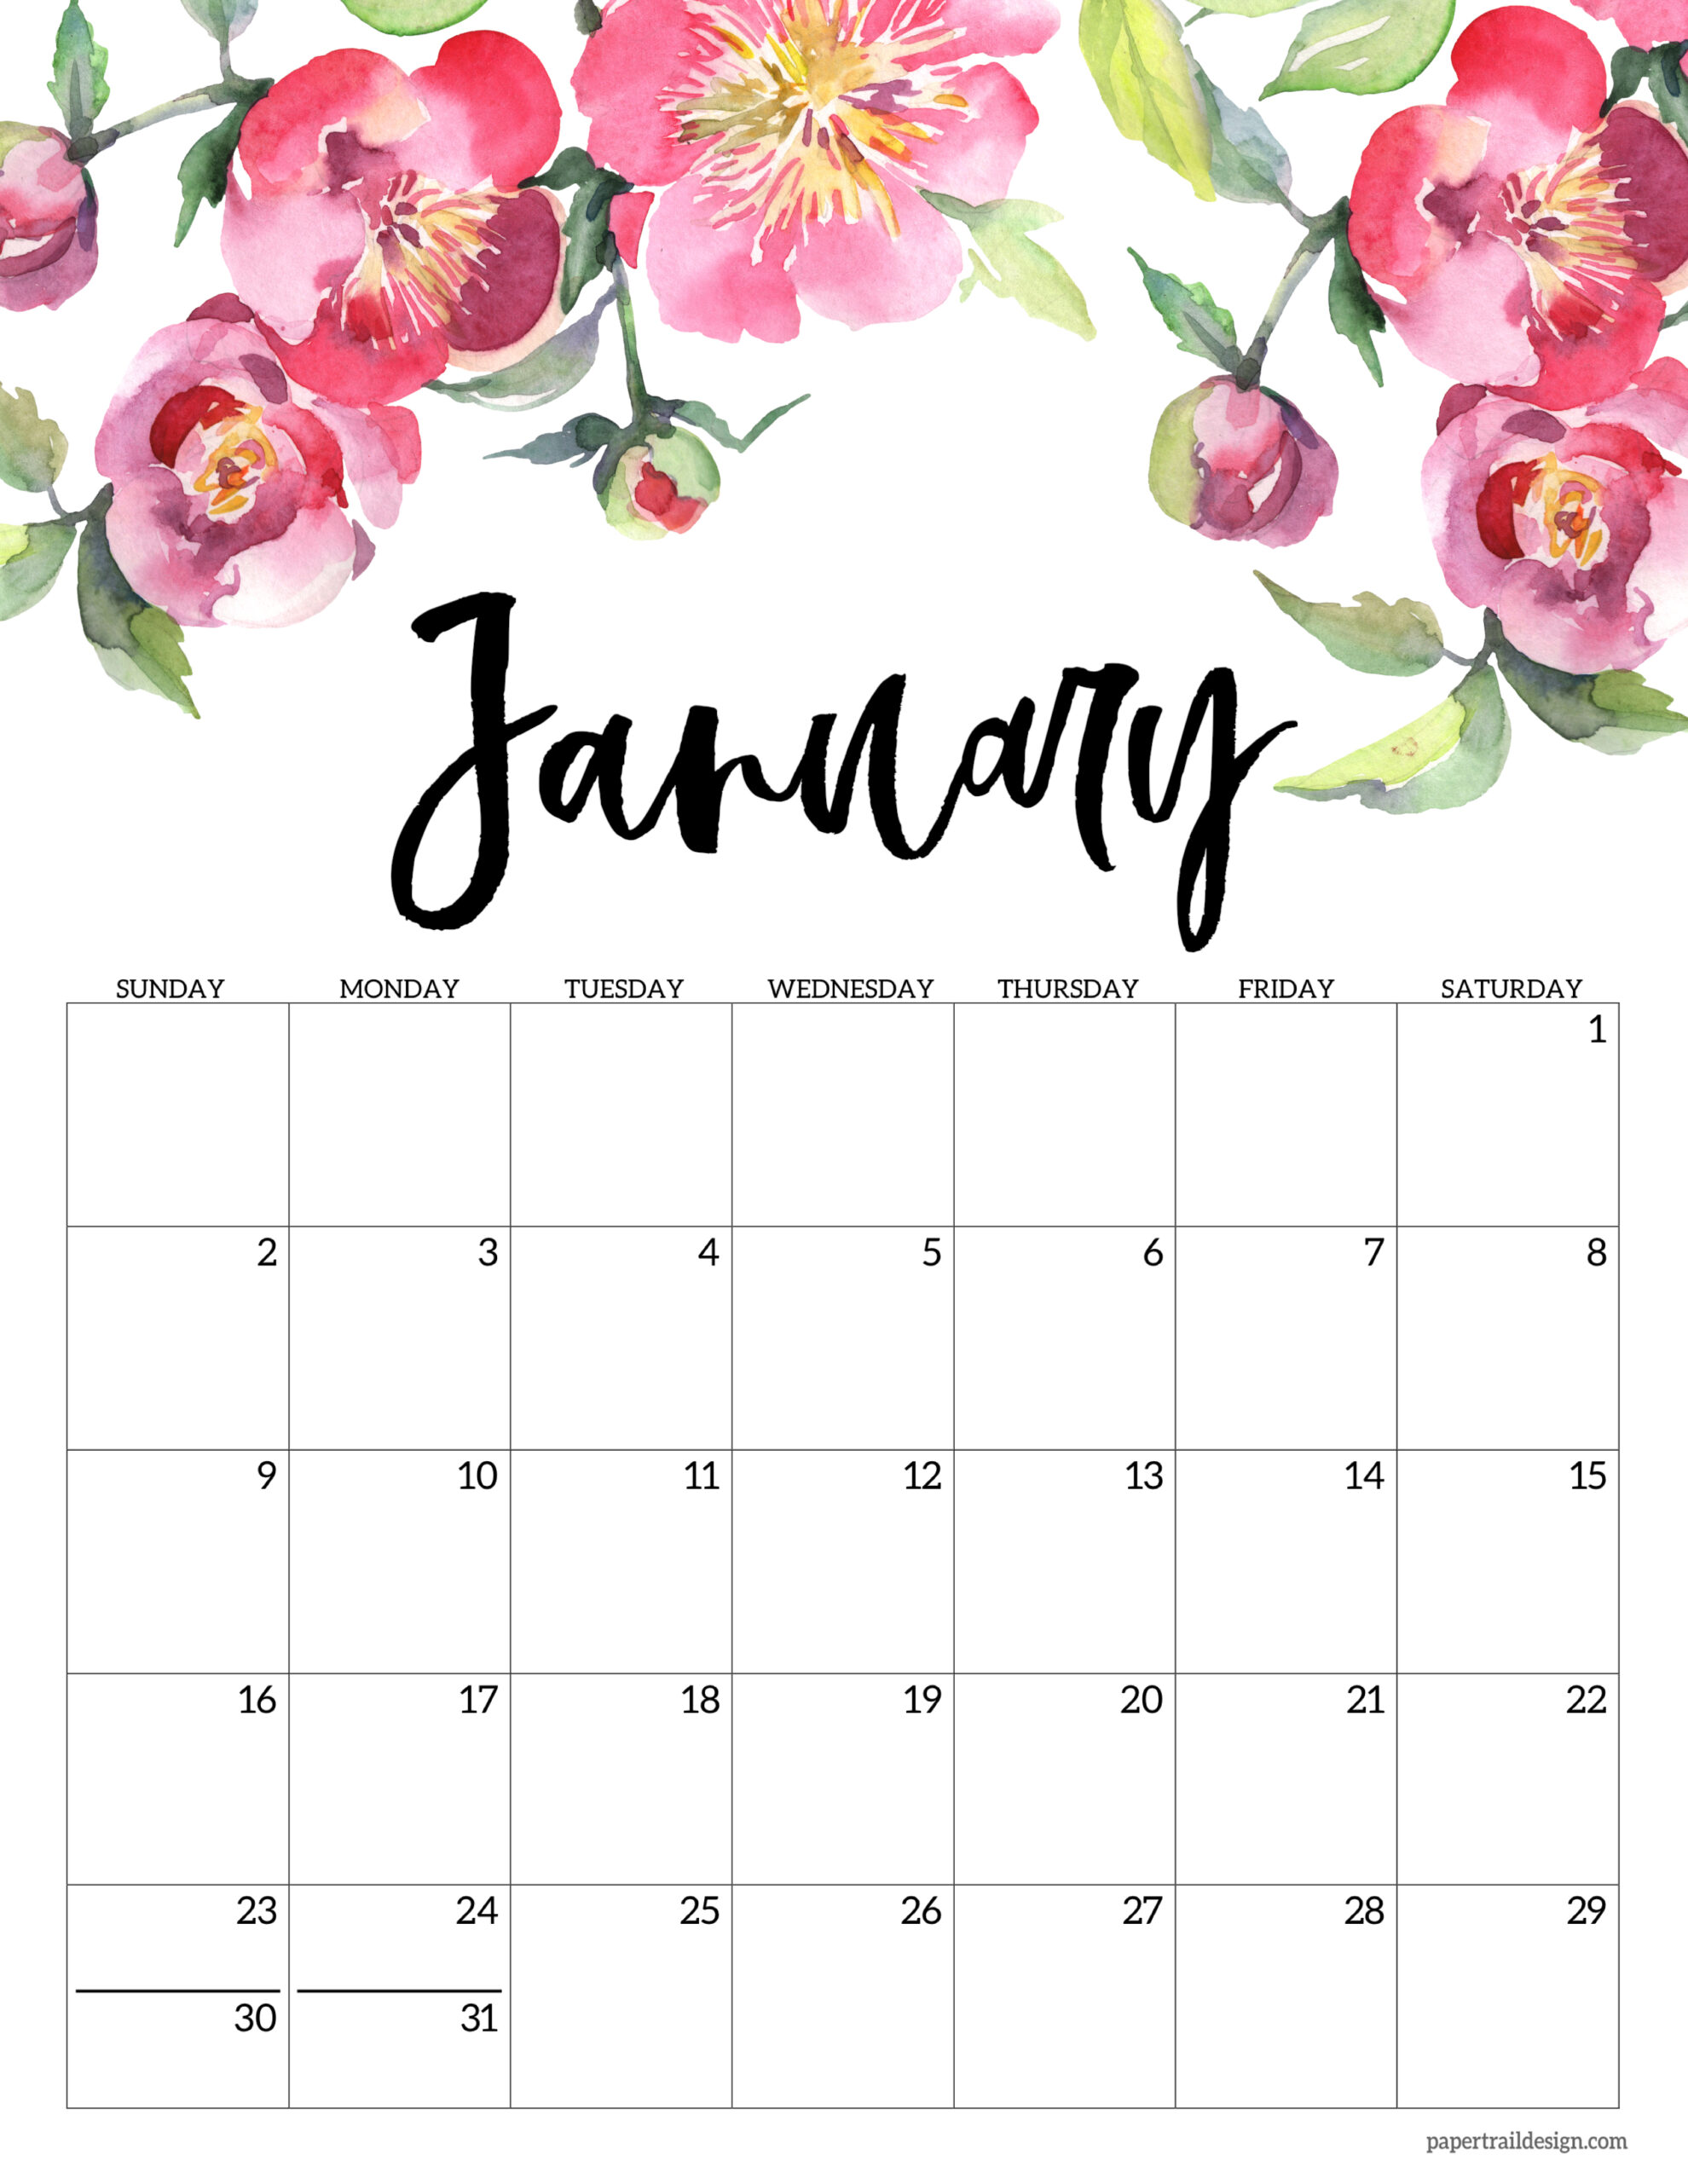 Pretty January 2022 Calendar Free Printable 2022 Floral Calendar - Paper Trail Design